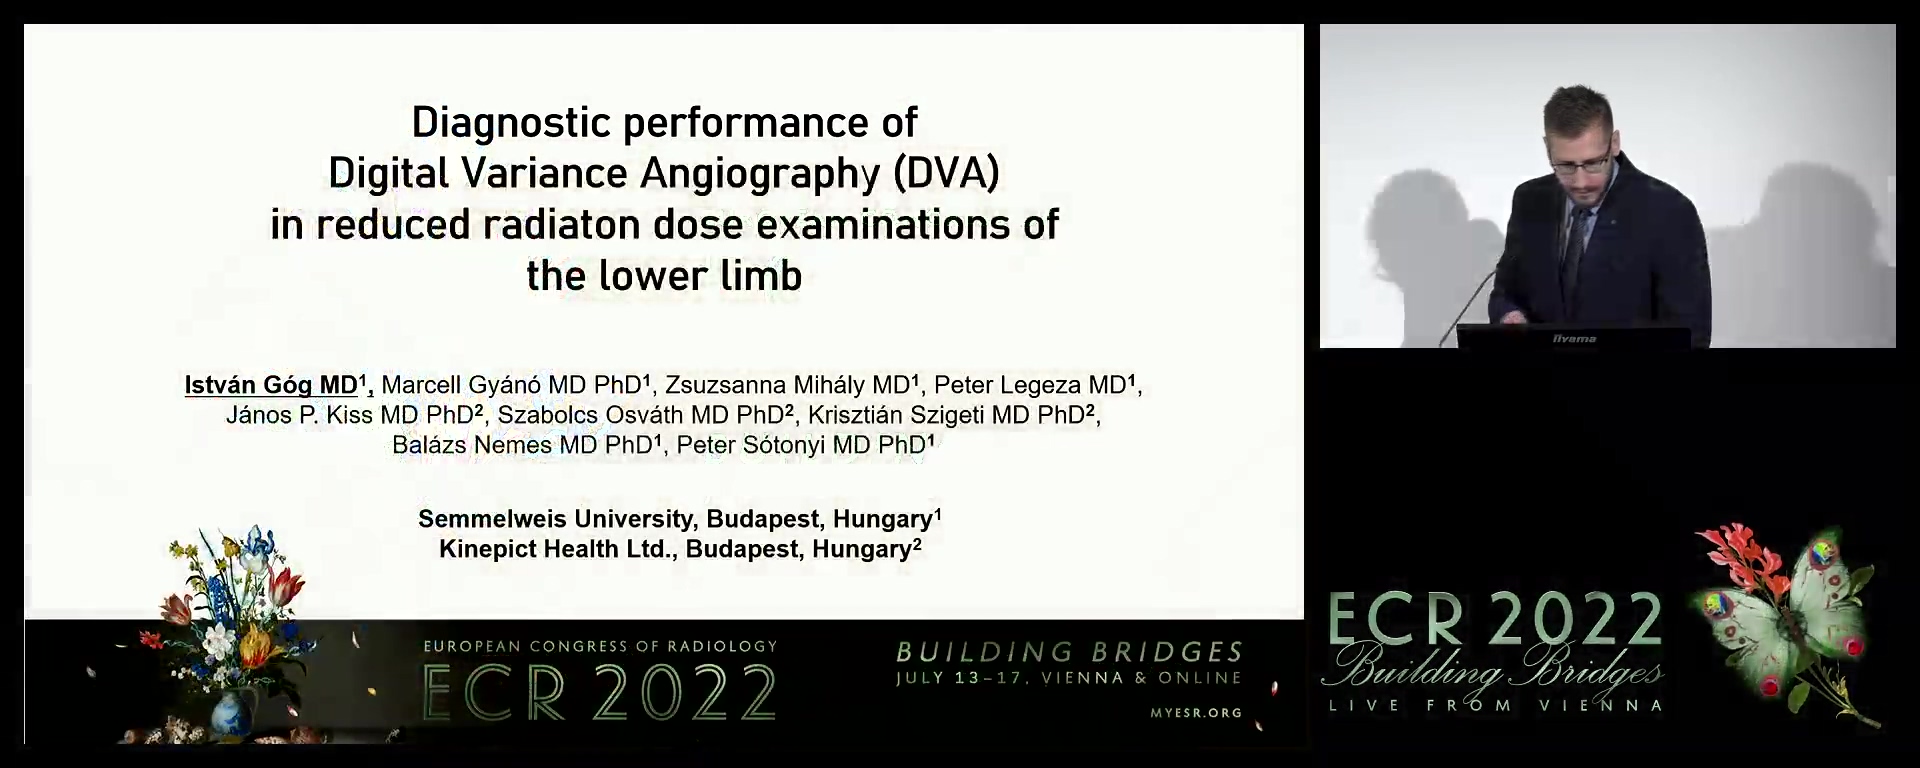 Diagnostic performance of digital variance angiography in reduced radiation lower limb examinations - István Góg, Budapest / HU